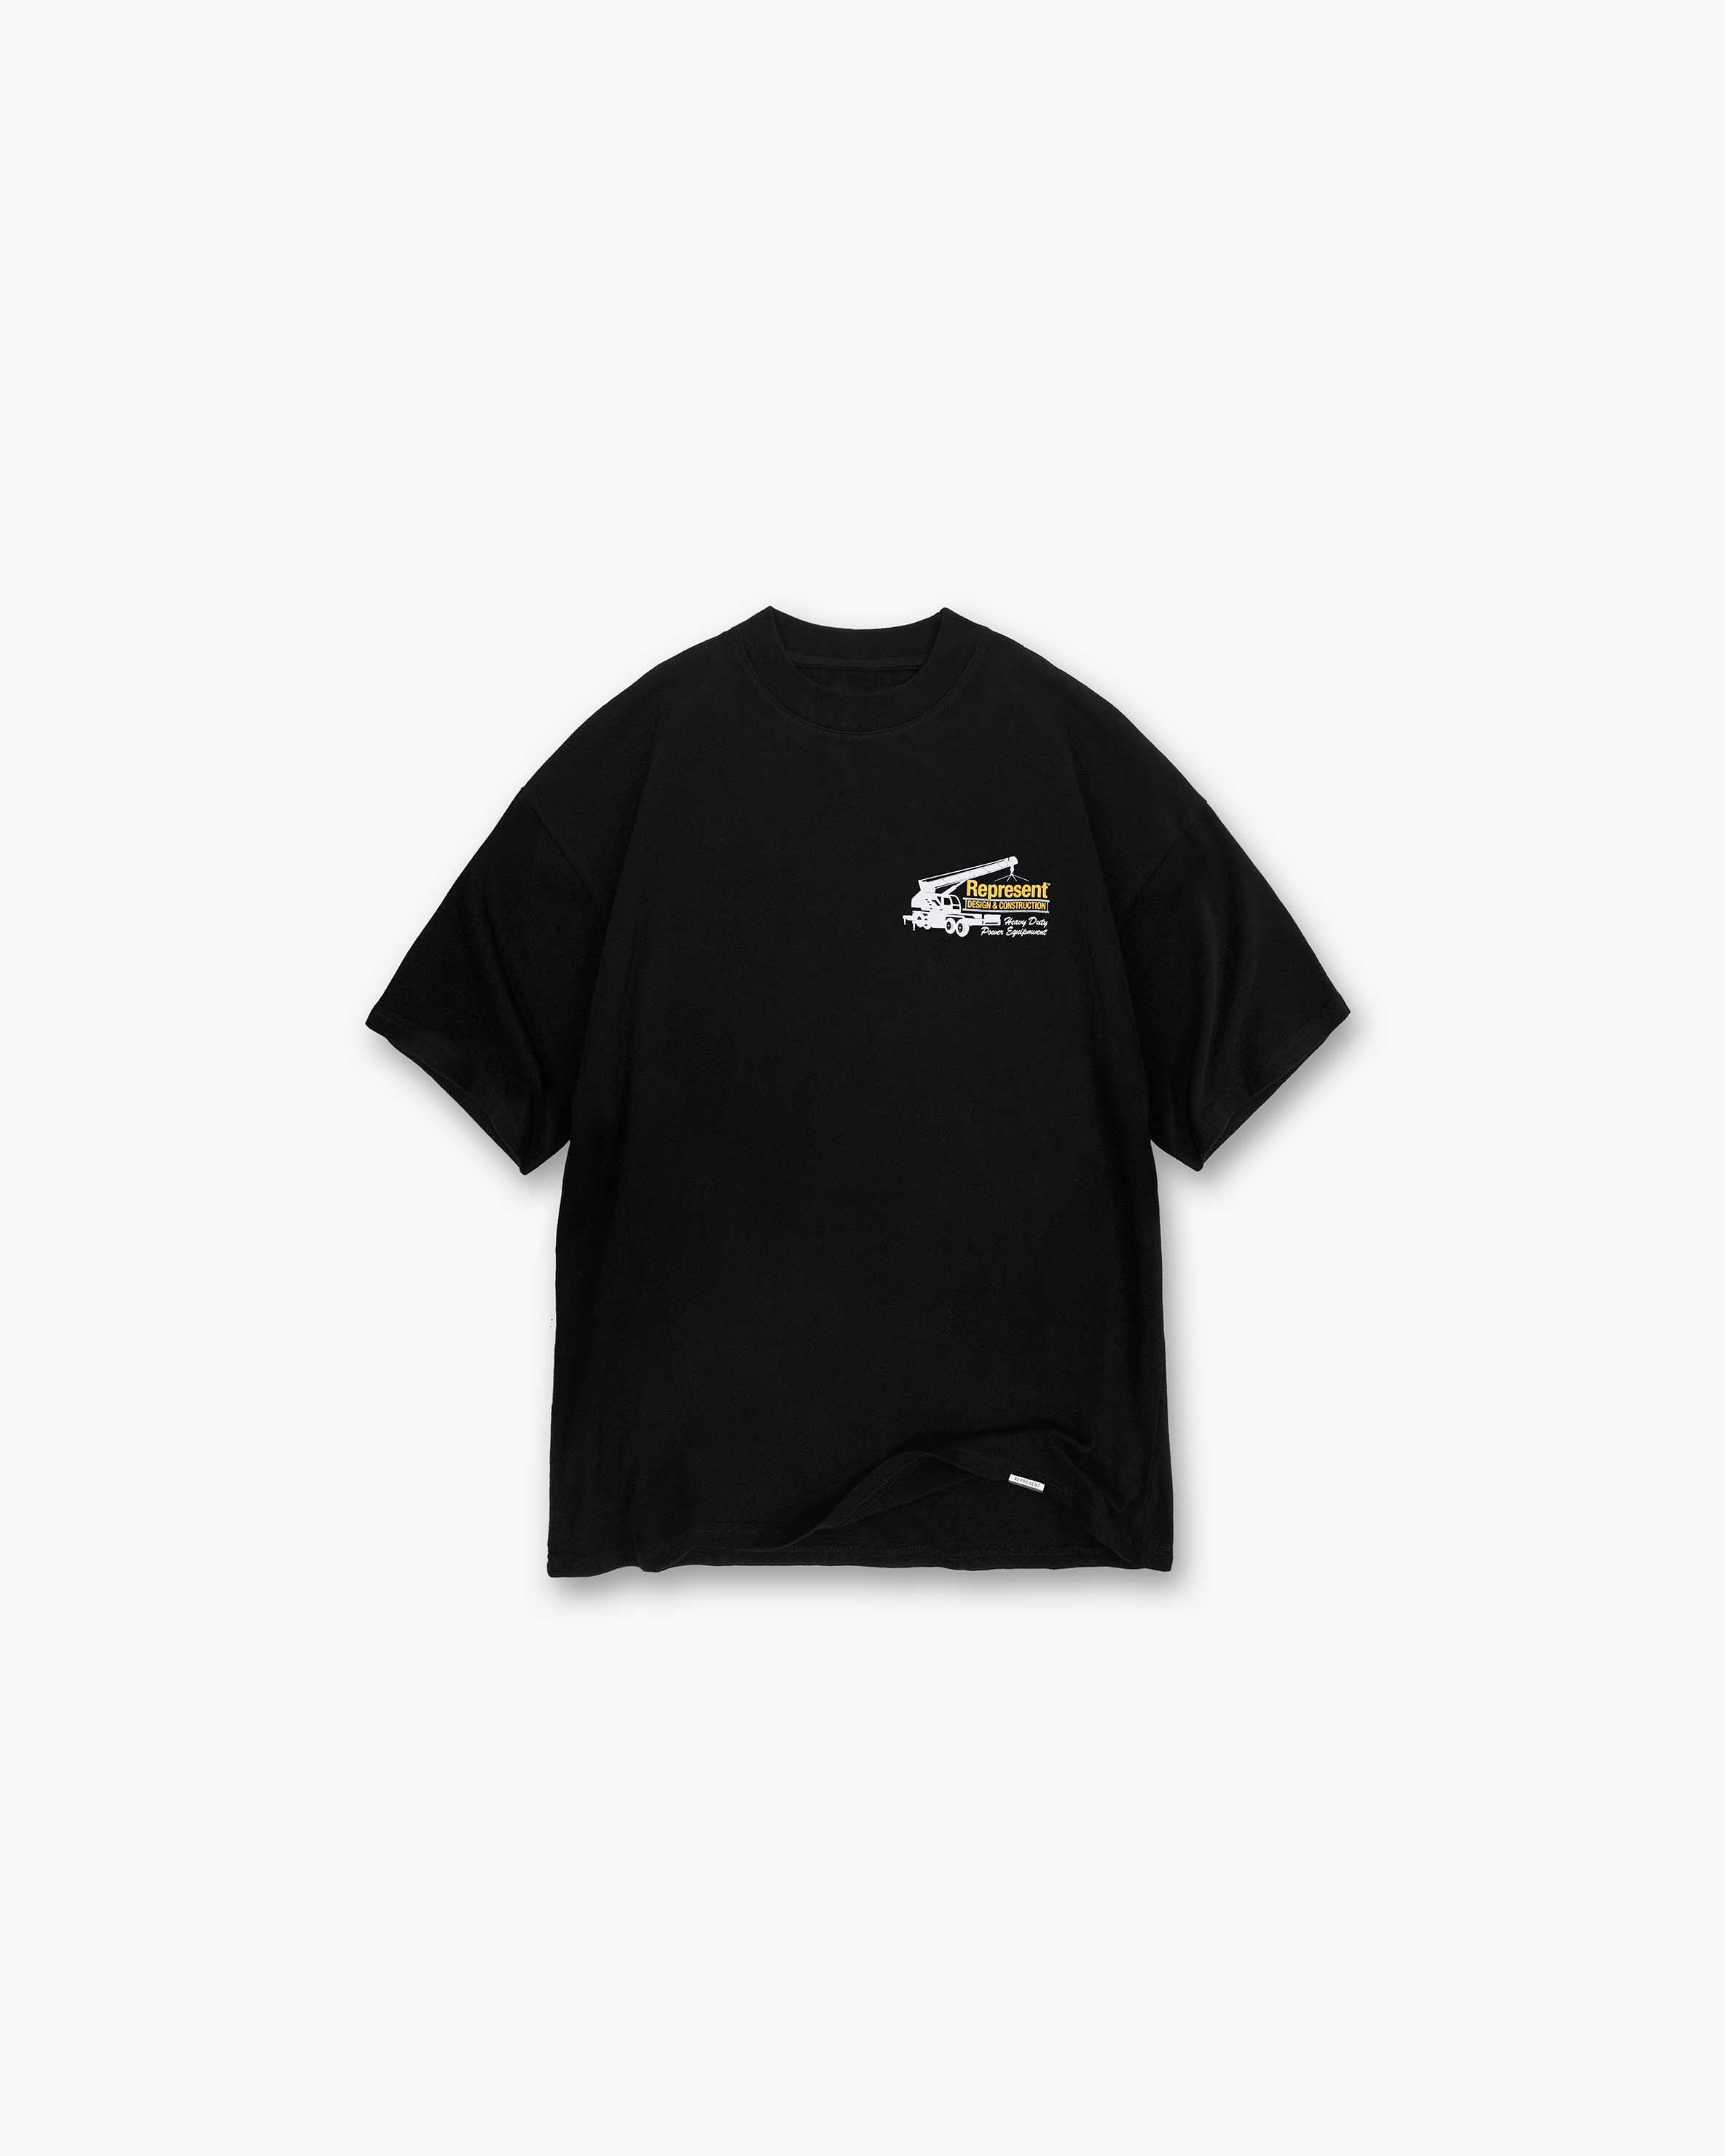 Design & Construction T-Shirt - Black